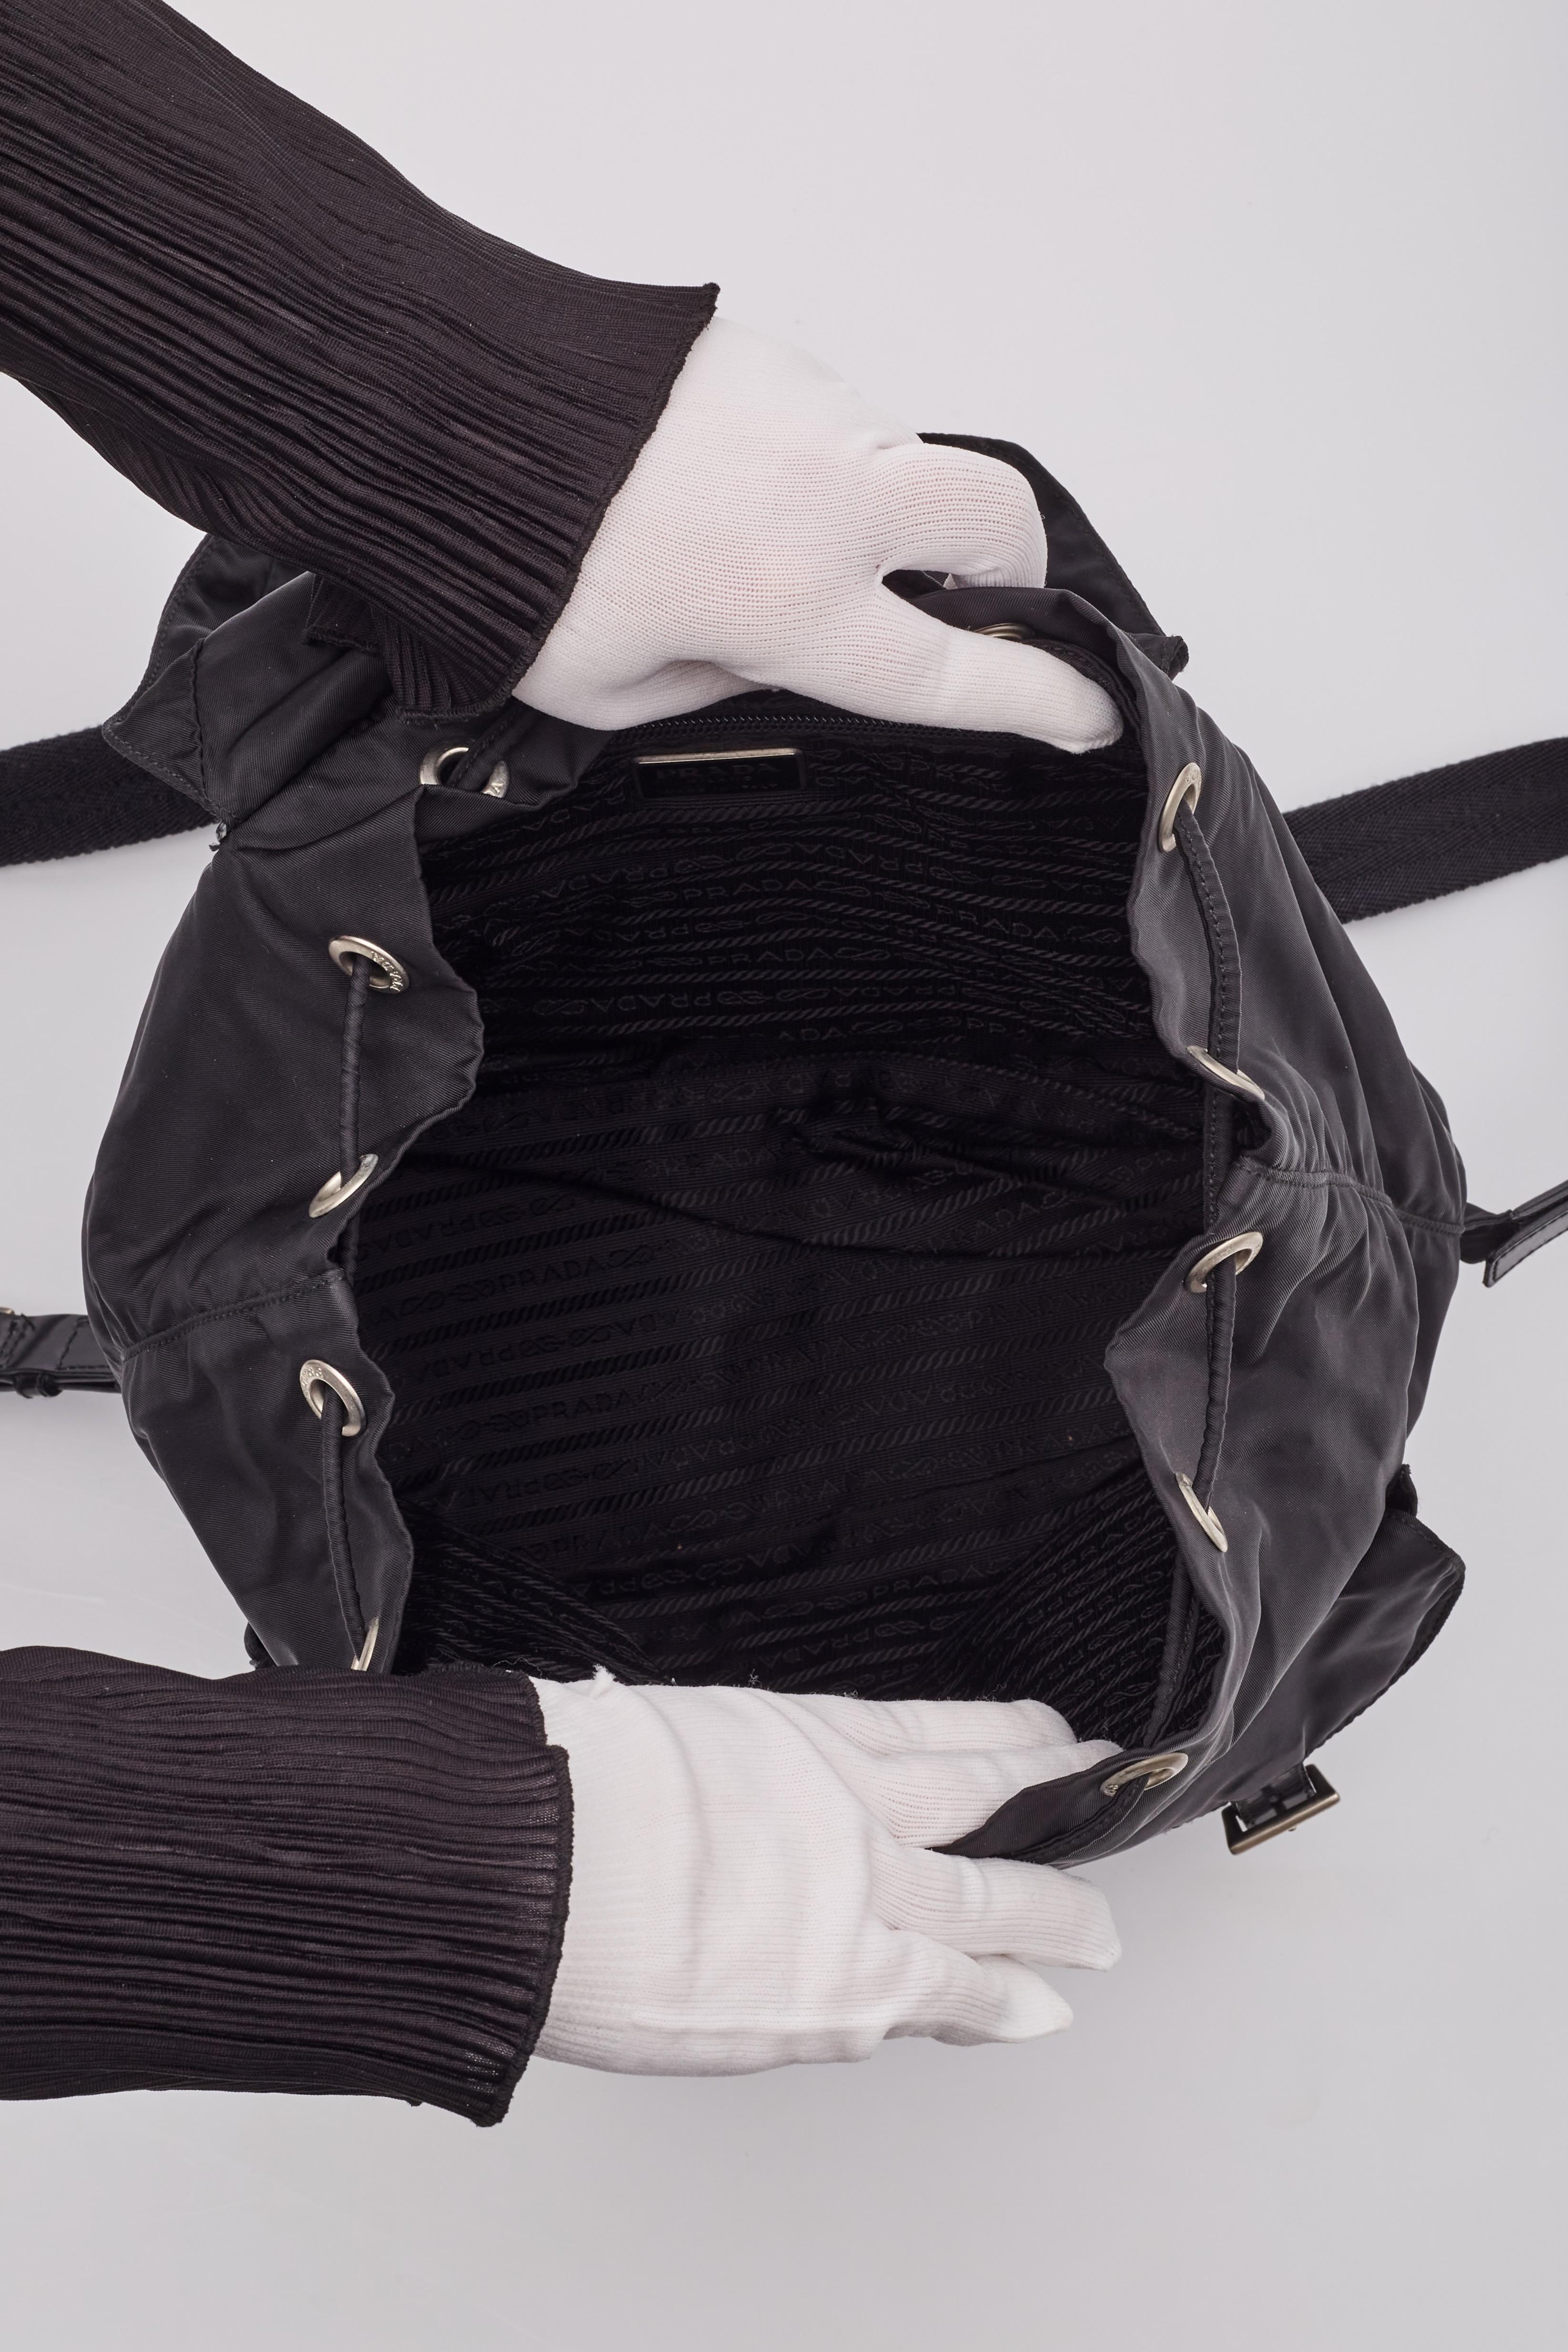 Prada Vintage Black Nylon Tessuto Two Pocket Backpack For Sale 6